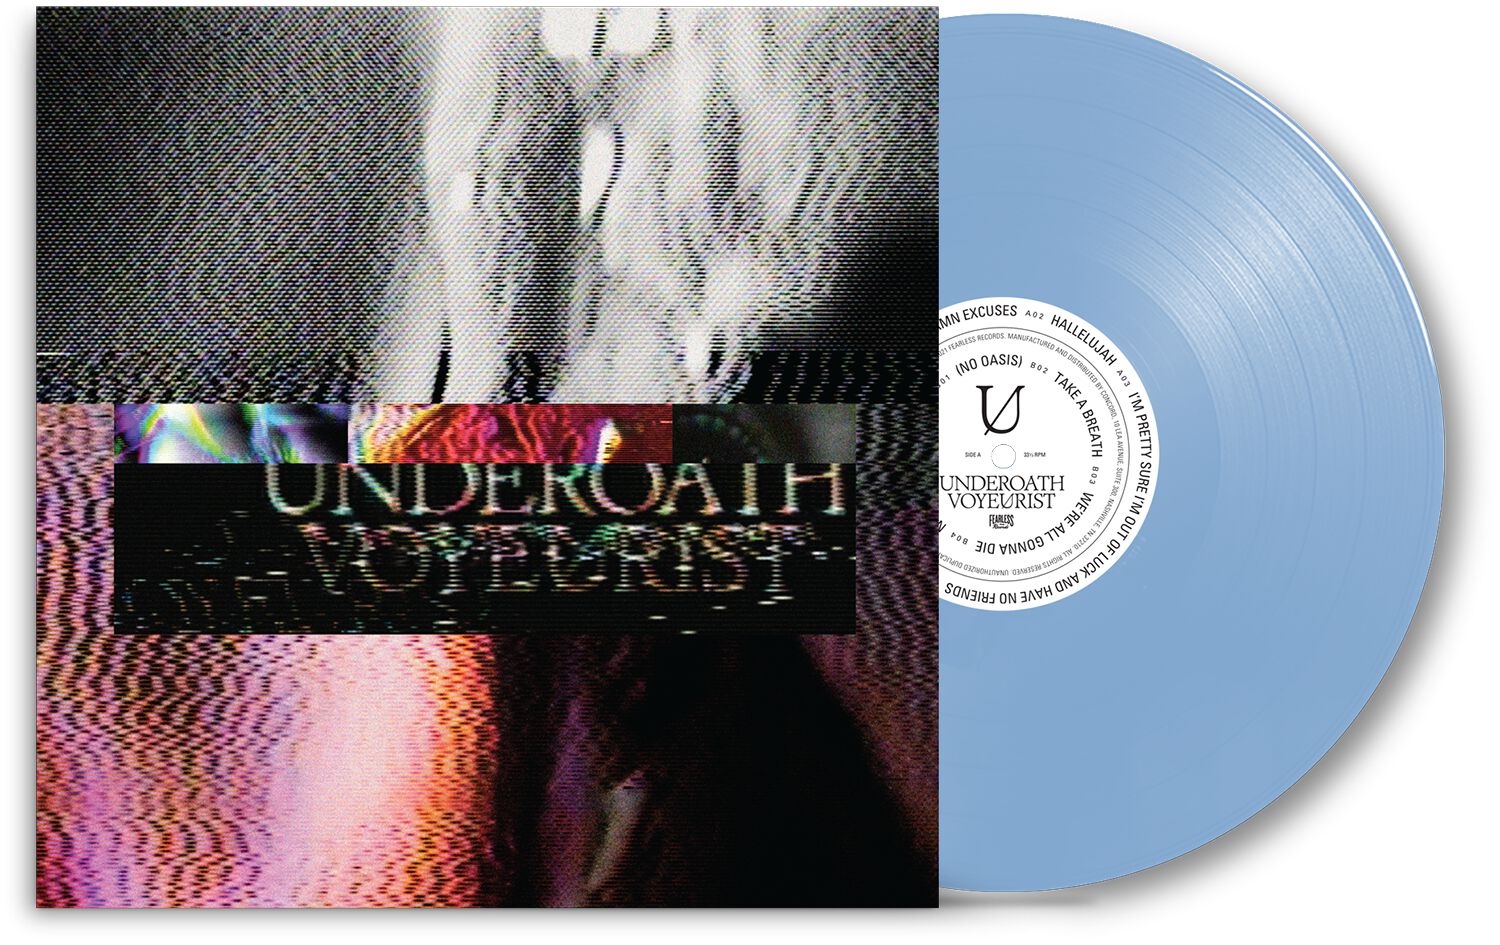 Underoath Voyeurist LP blue